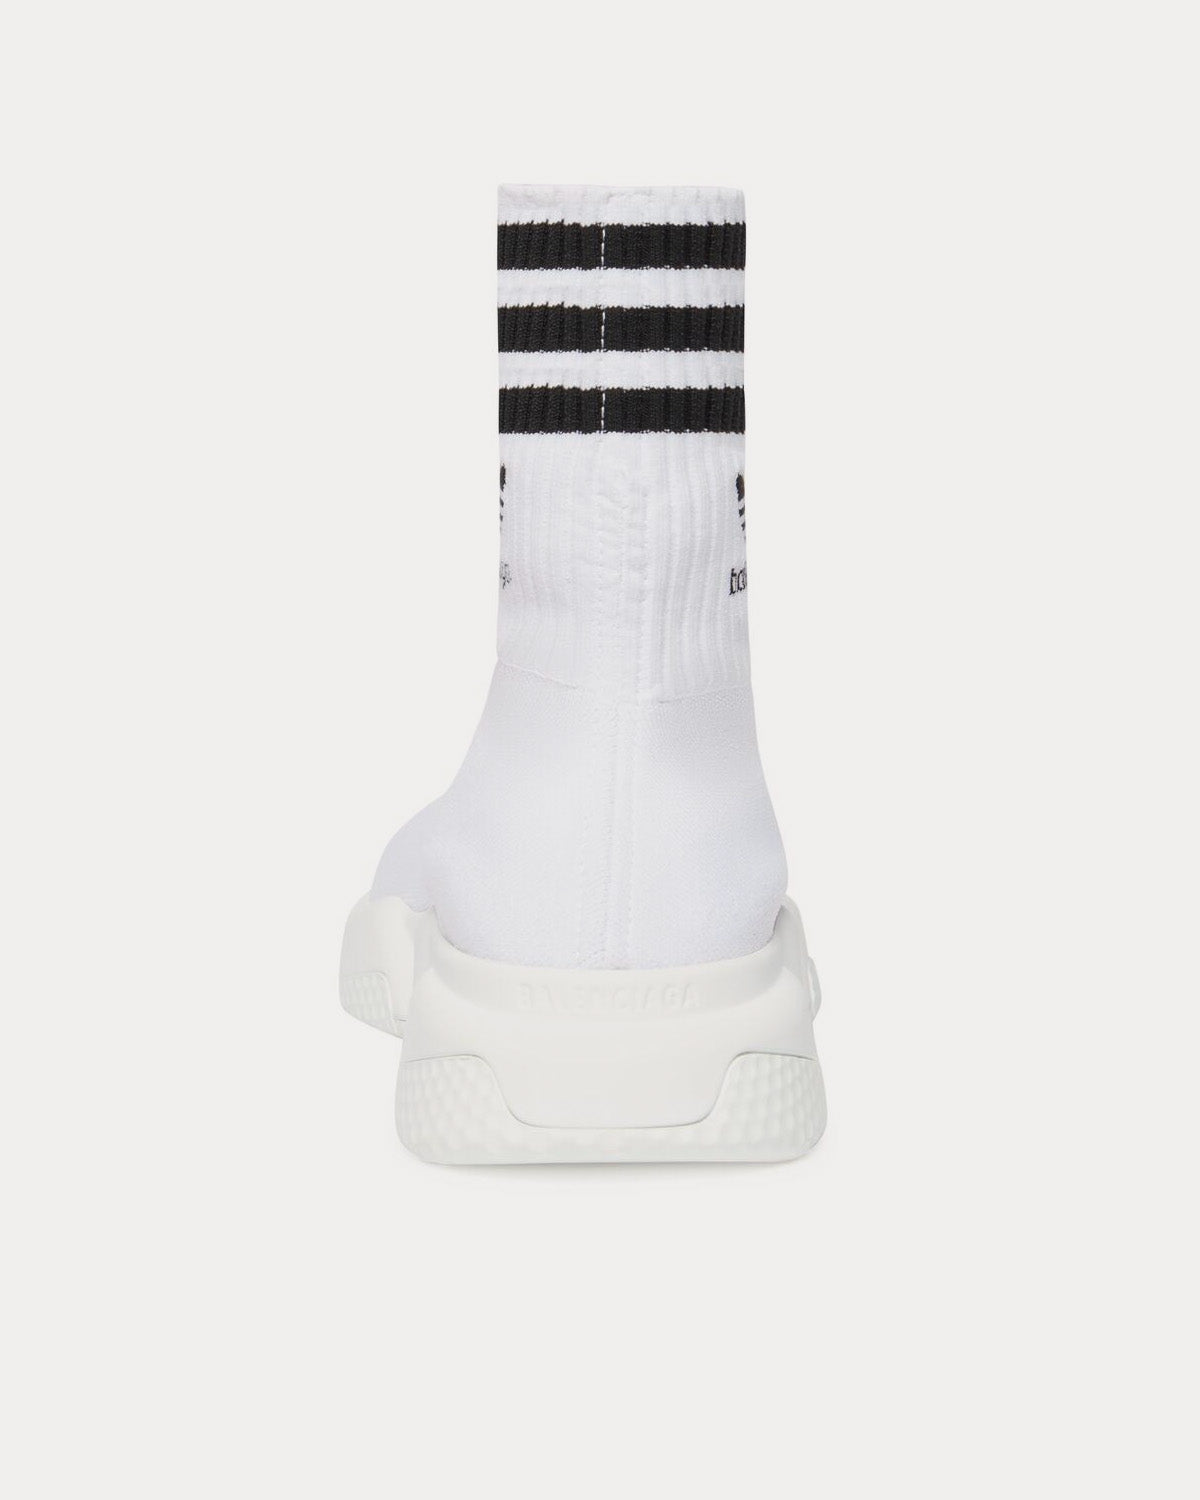 Balenciaga x Adidas - Speed Knit White High Top Sneakers